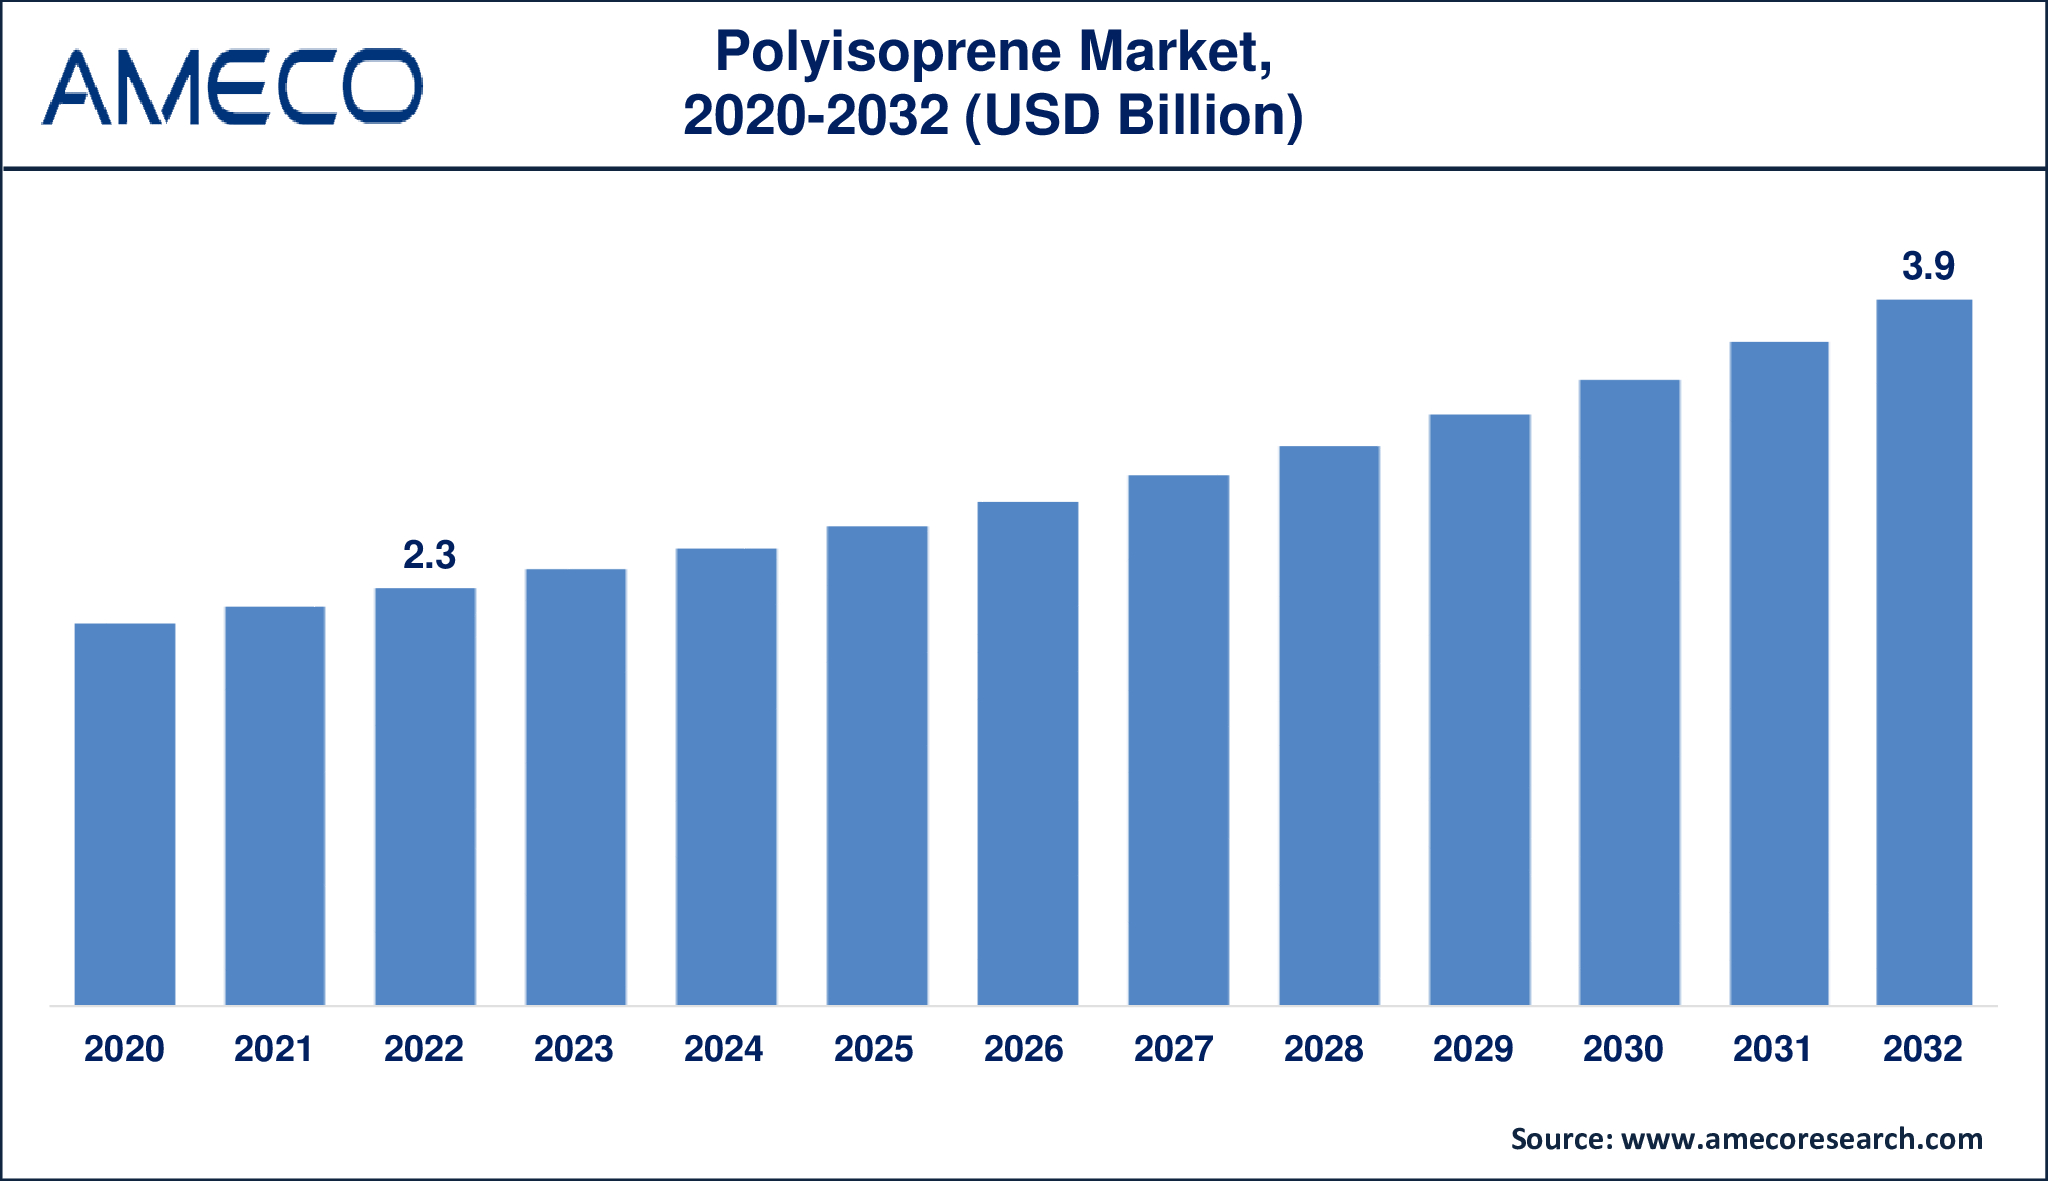 Polyisoprene Market Dynamics